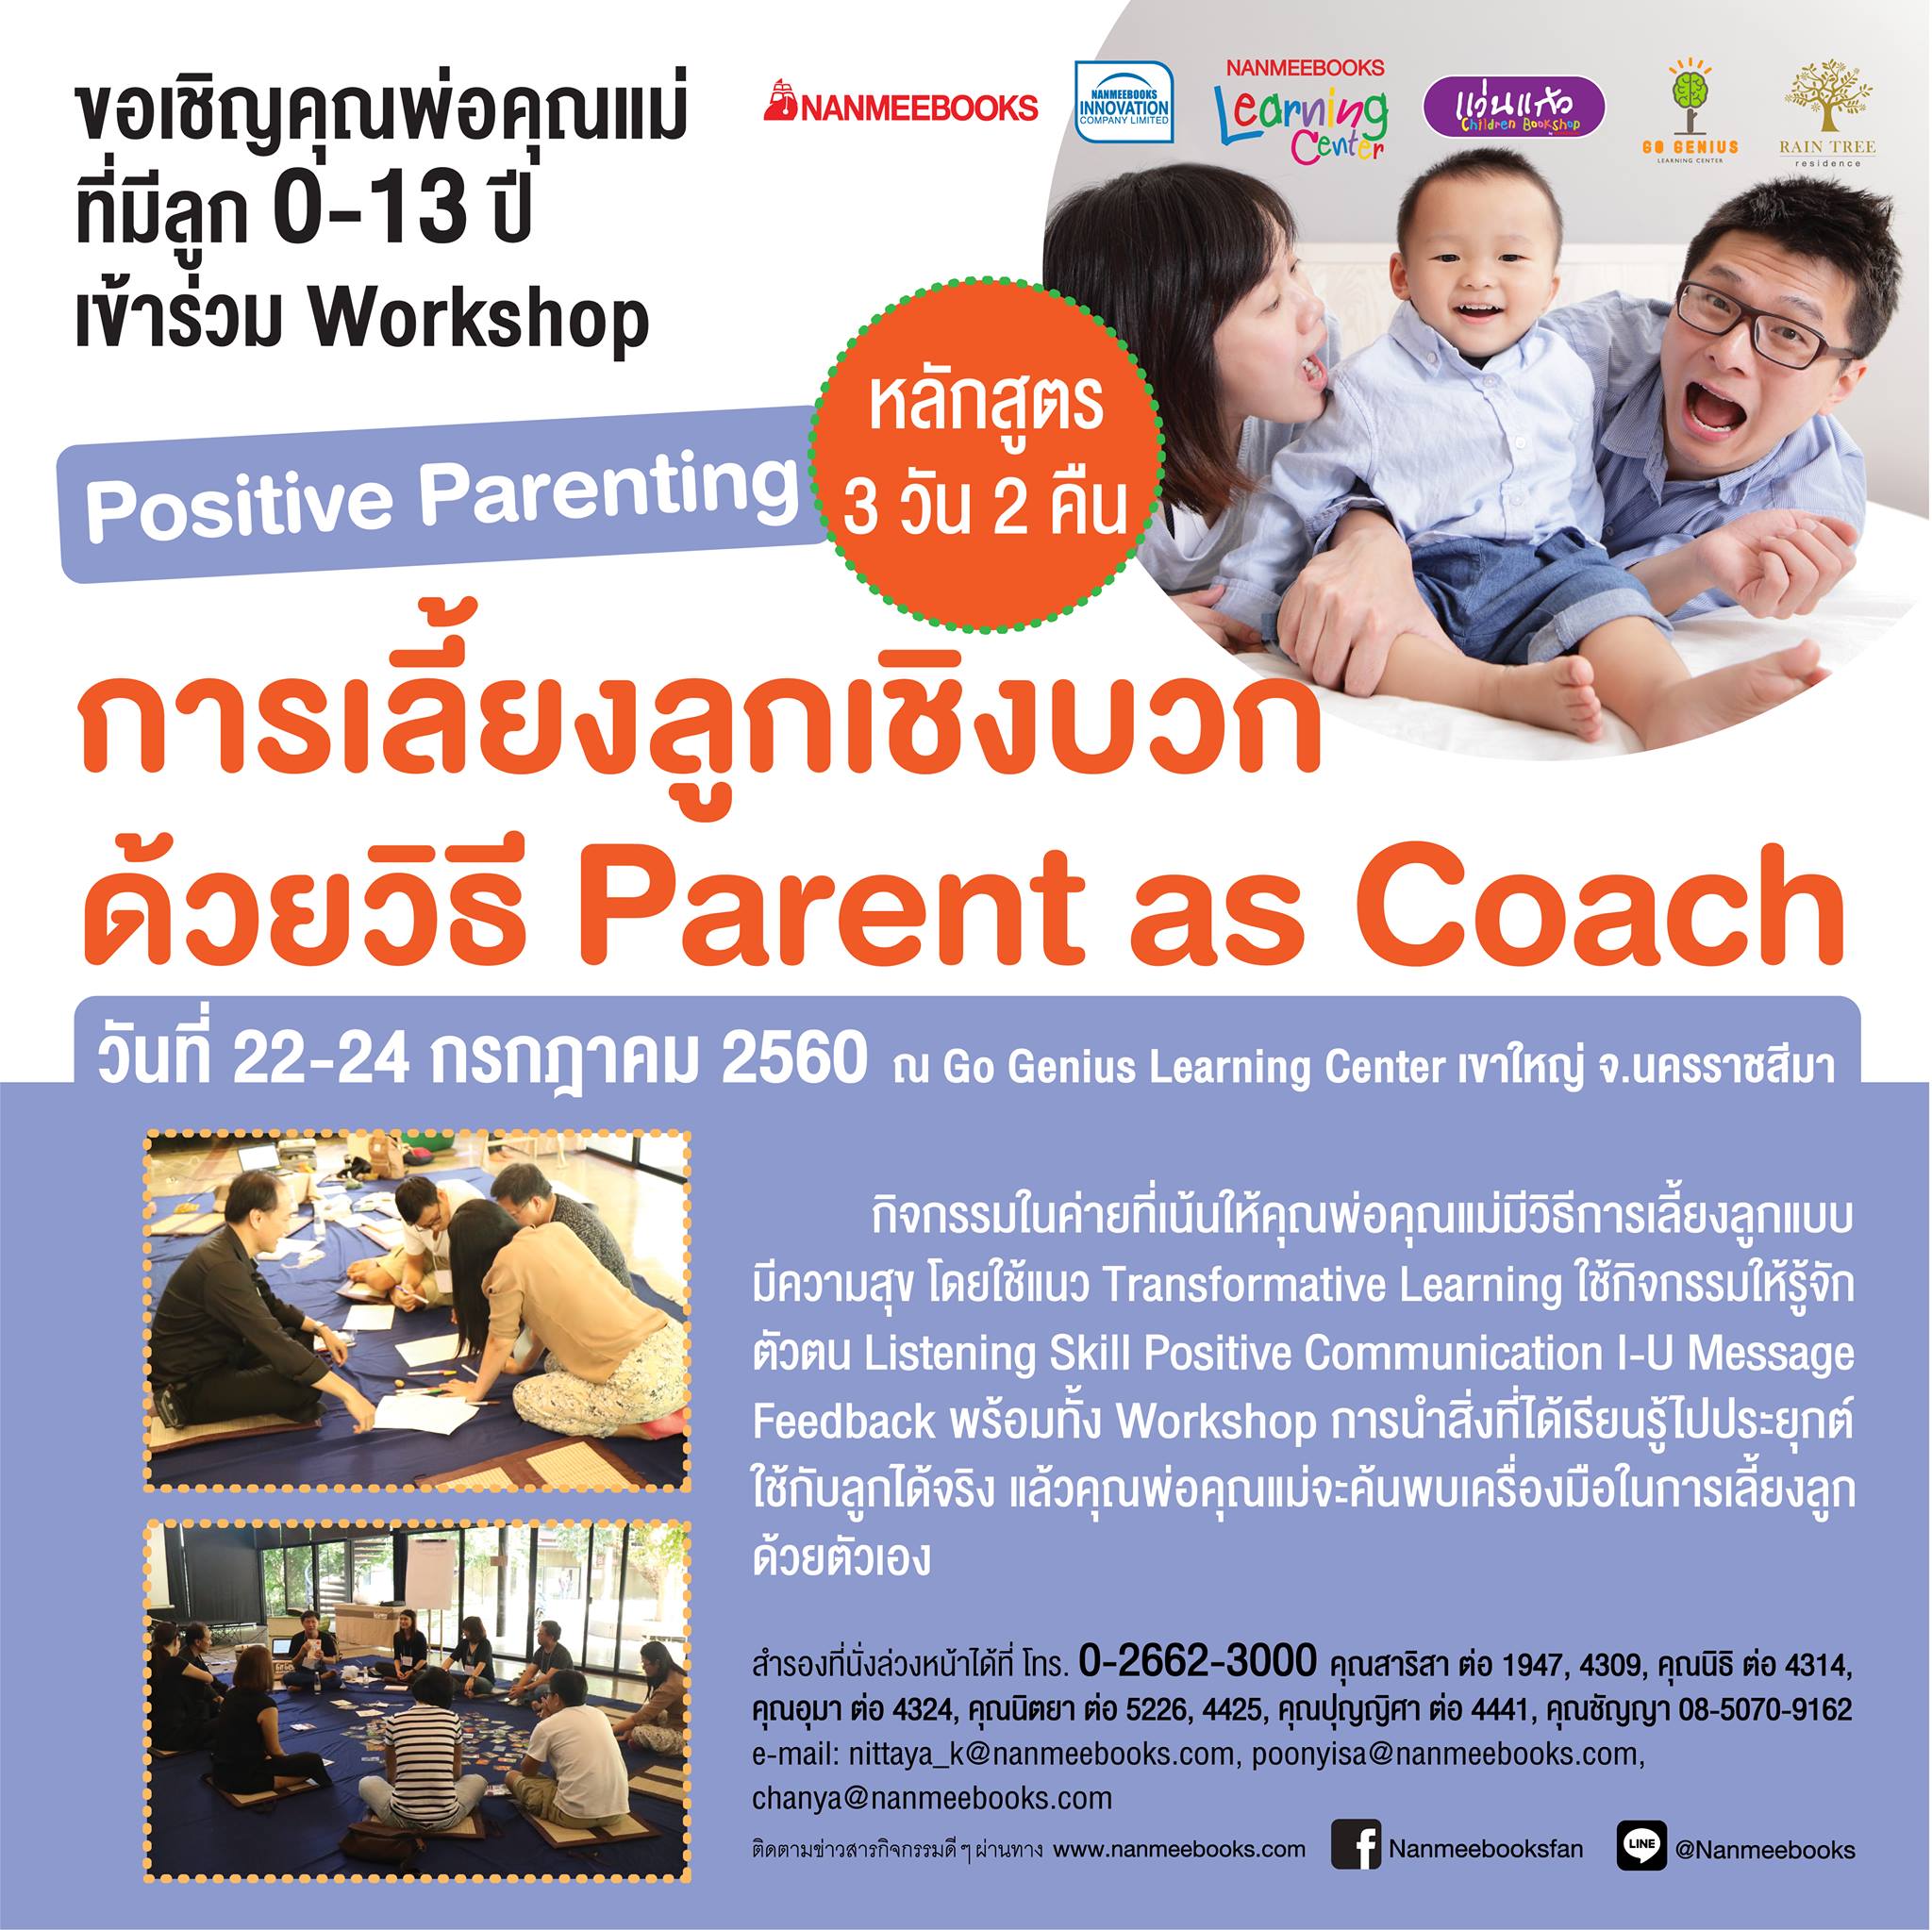 Workshop การเลี้ยงลูกเชิงบวกด้วยวิธี Parent as Coach